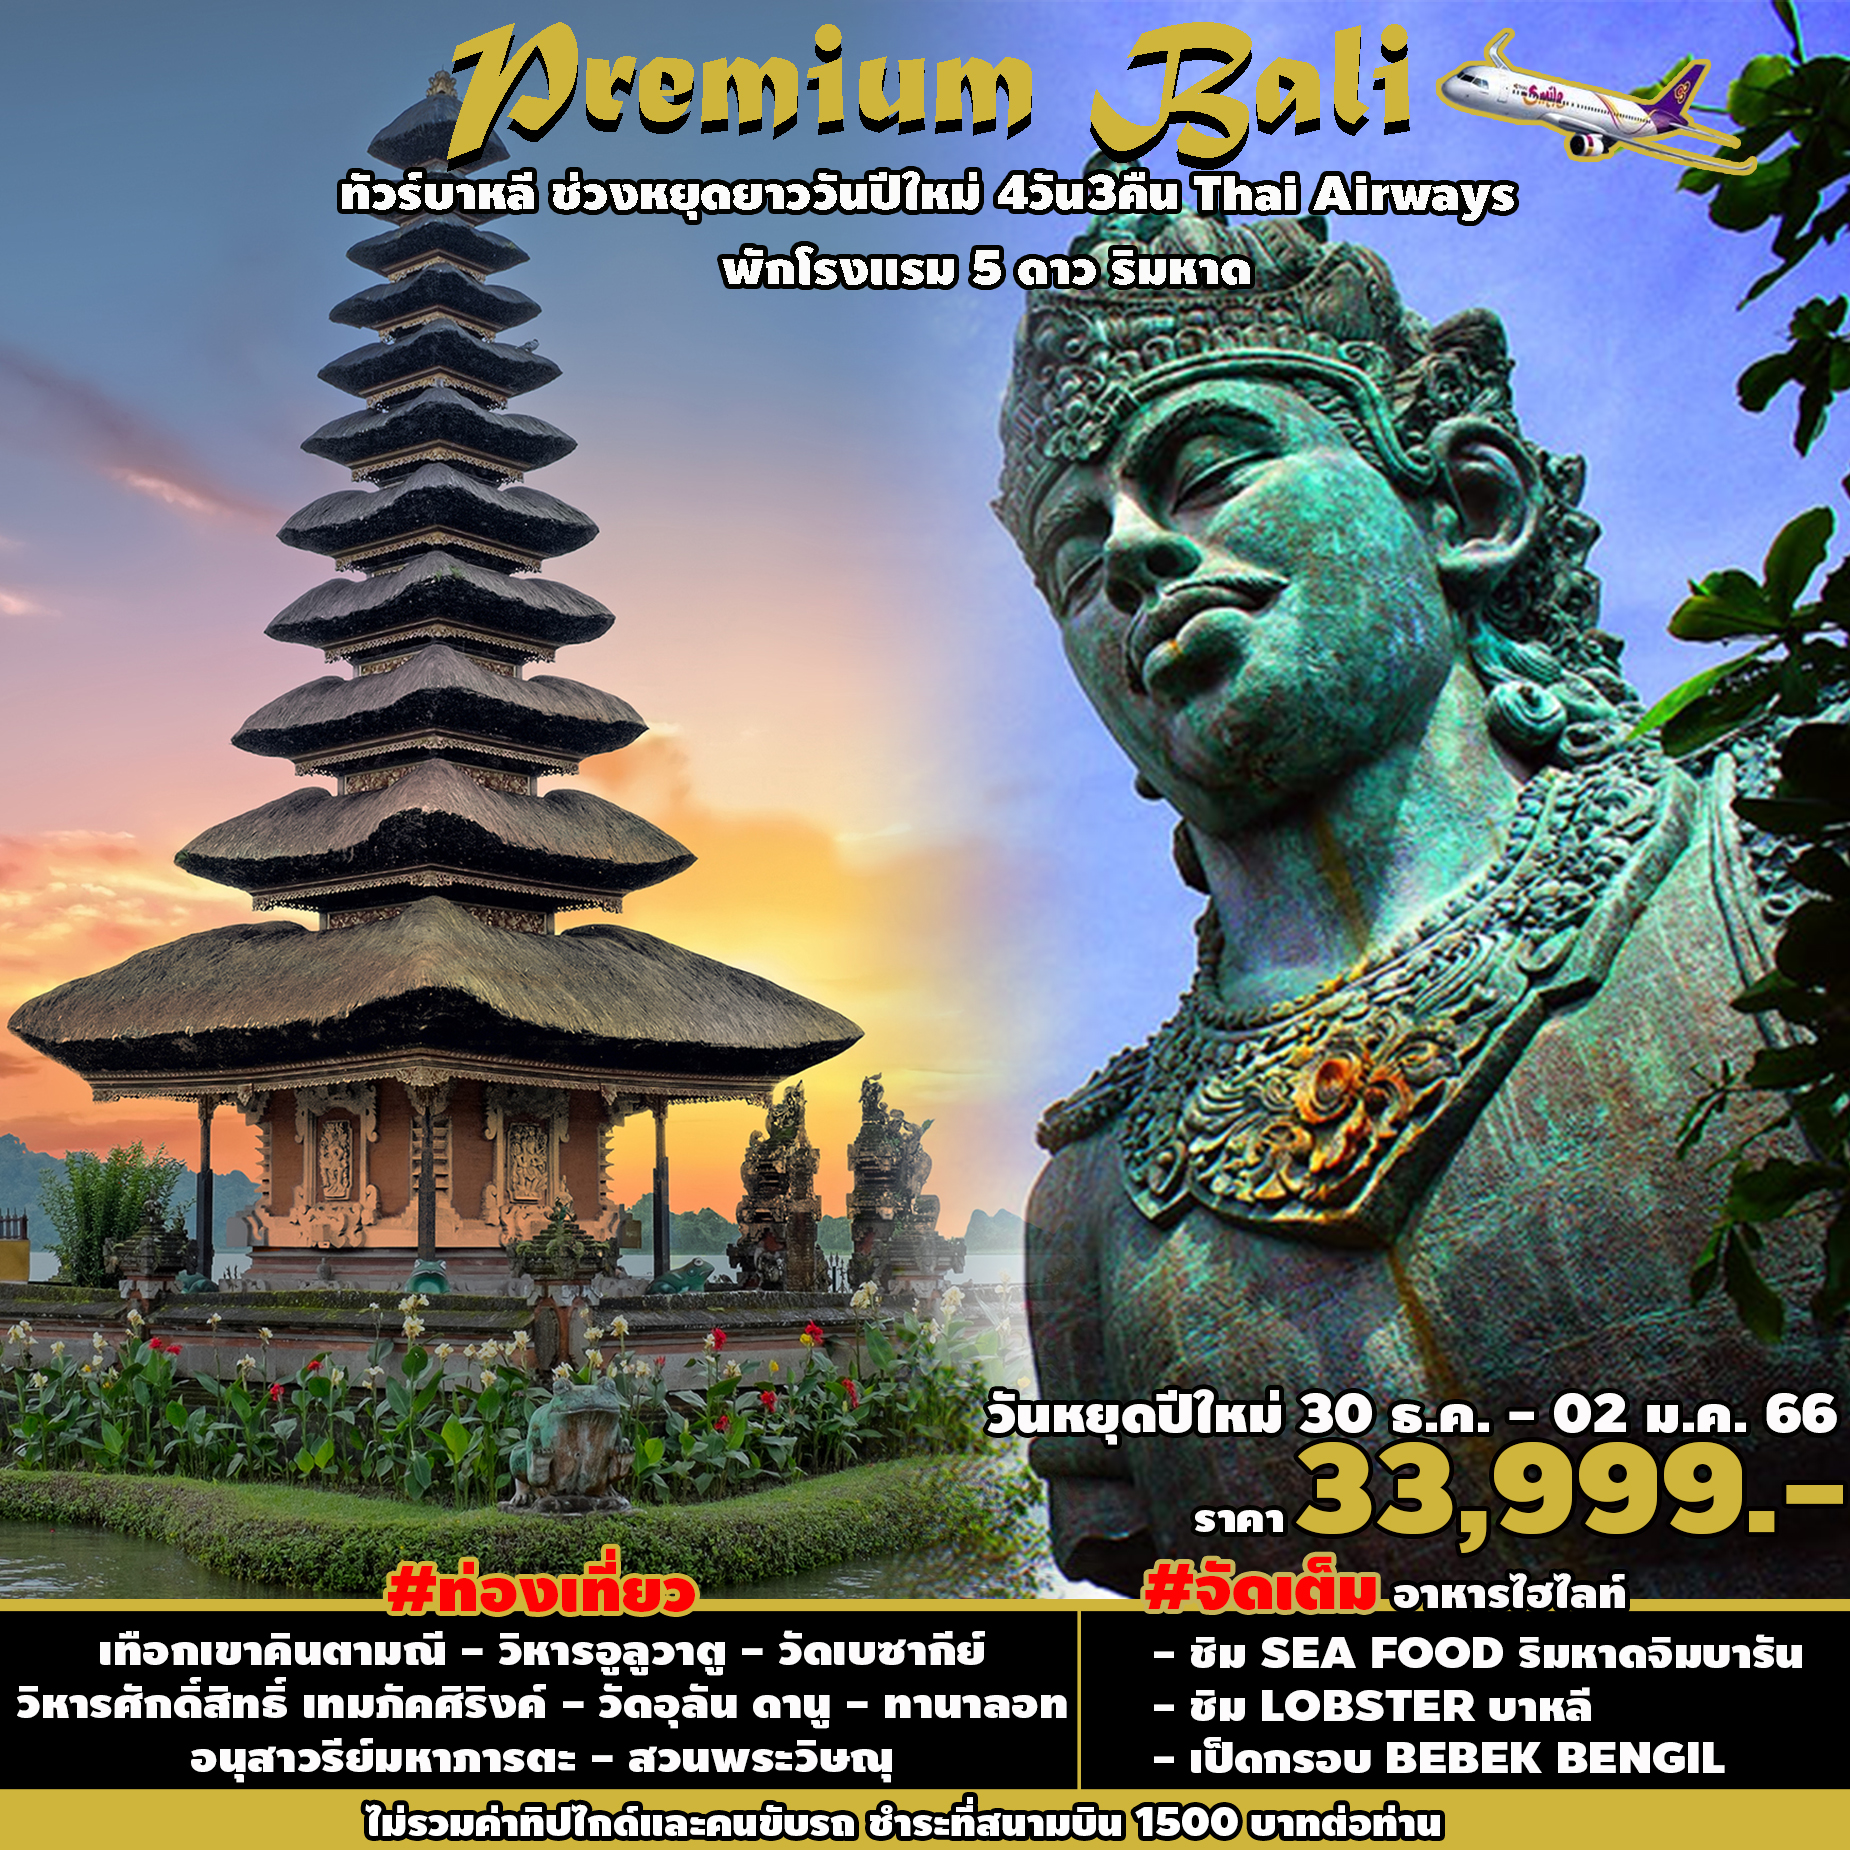 Premium Bali 4D